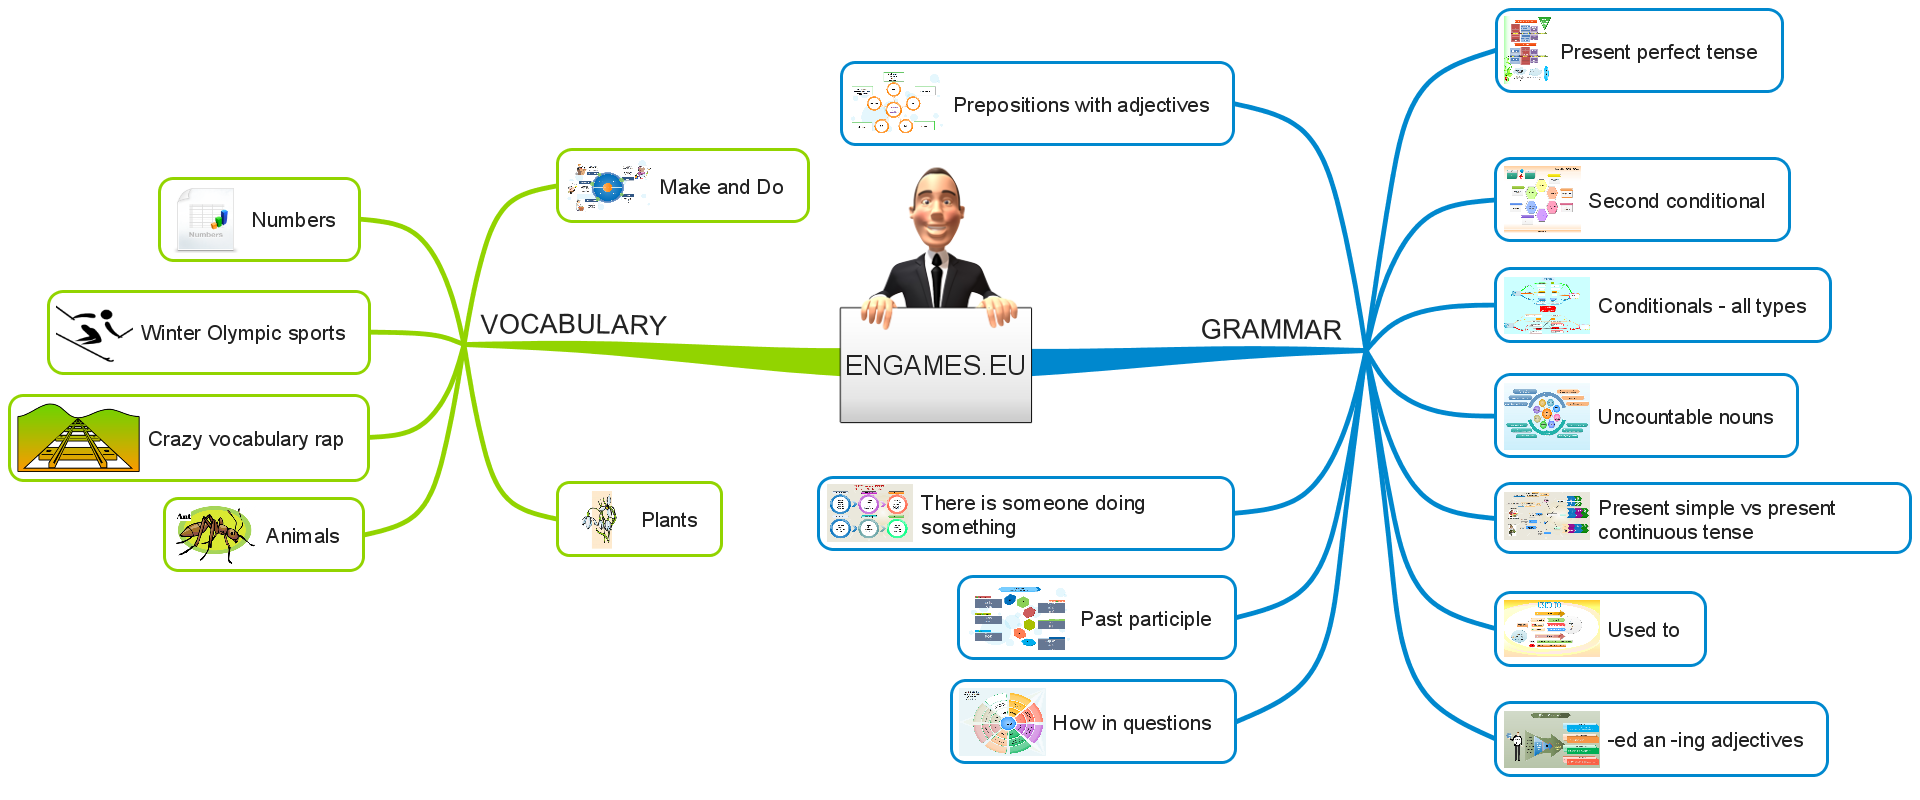 Engames eu site map all grammar and vocabulary posts